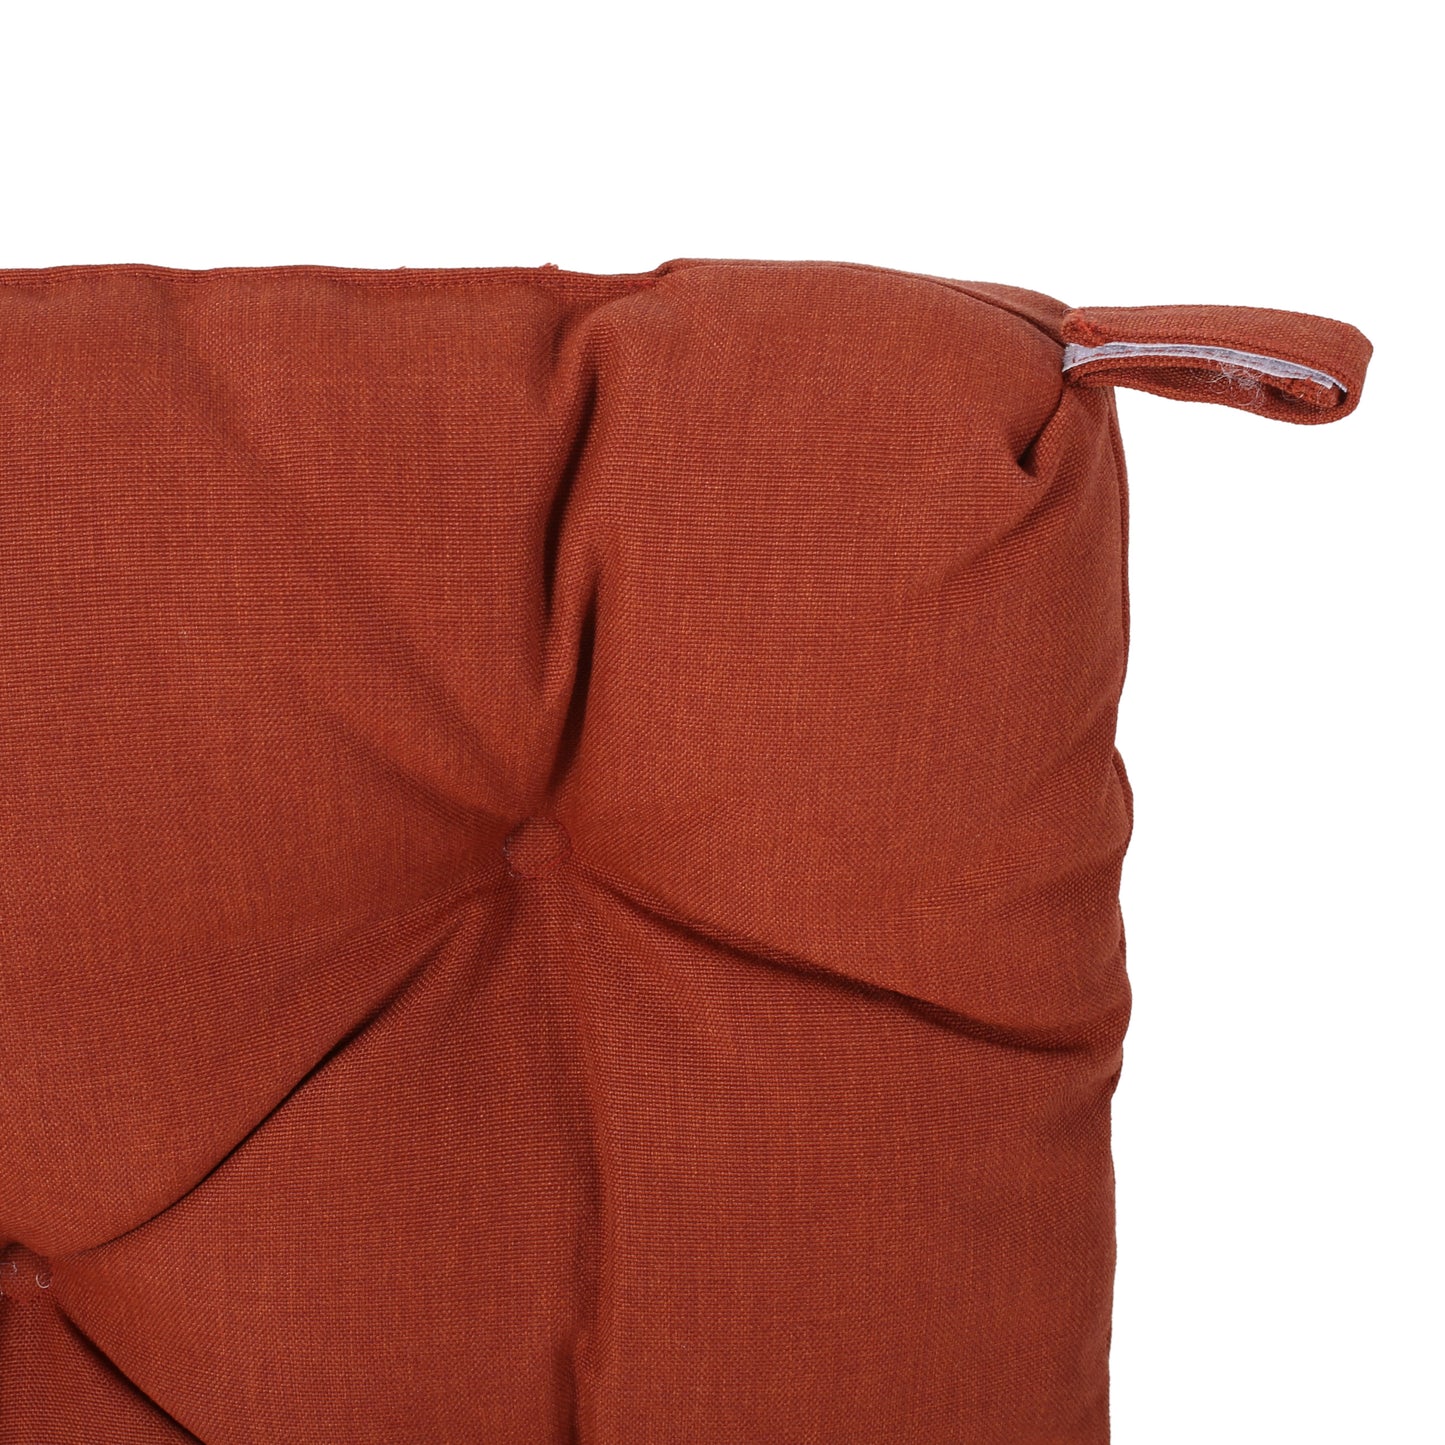 Teresa Outdoor Fabric Classic Tufted Chair Cushion